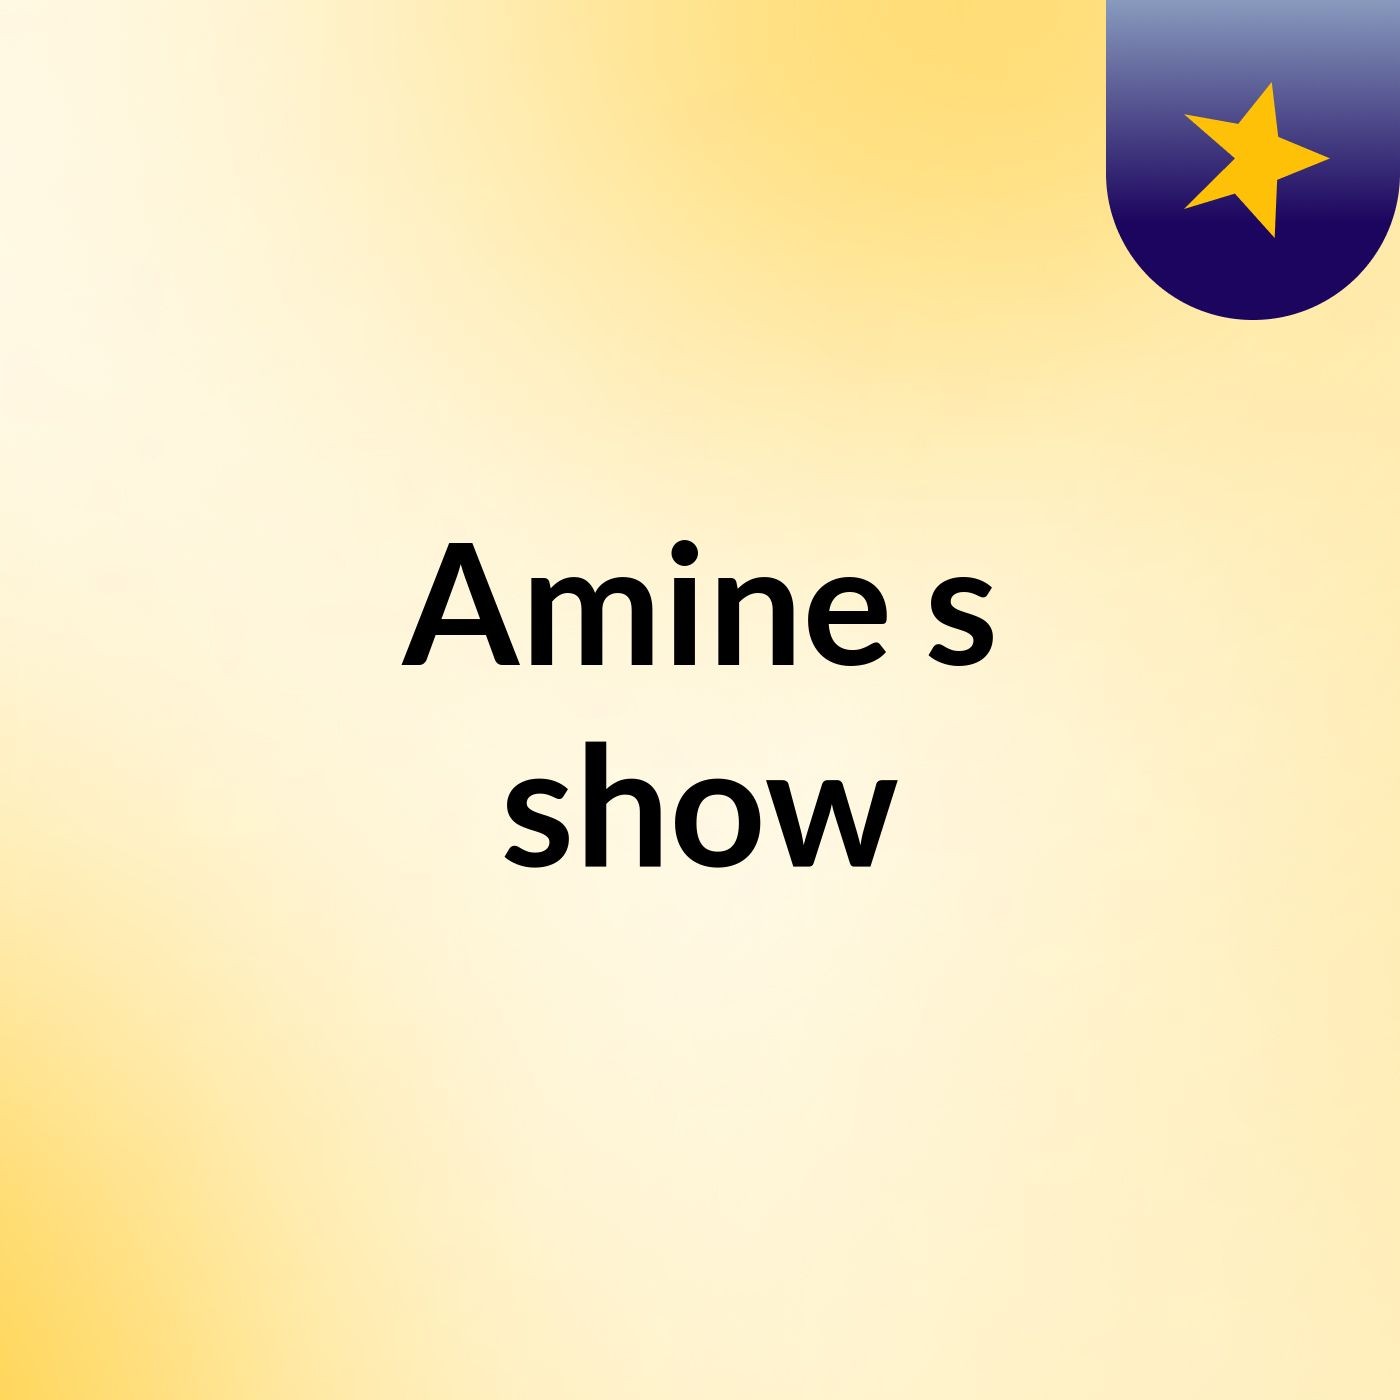 Amine's show